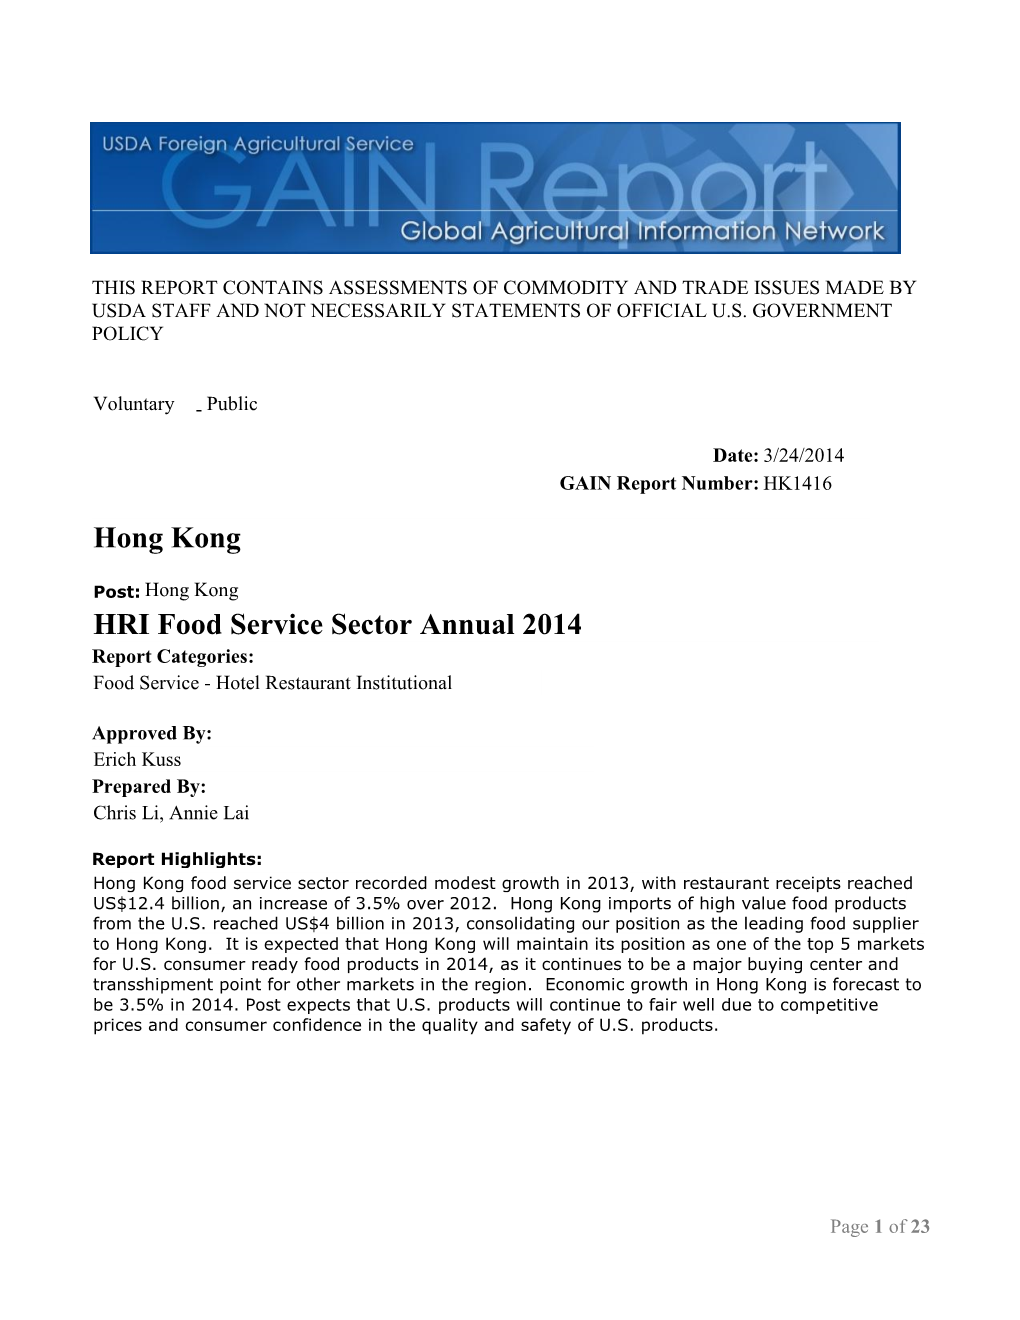 HRI Food Service Sector Annual 2014 Hong Kong